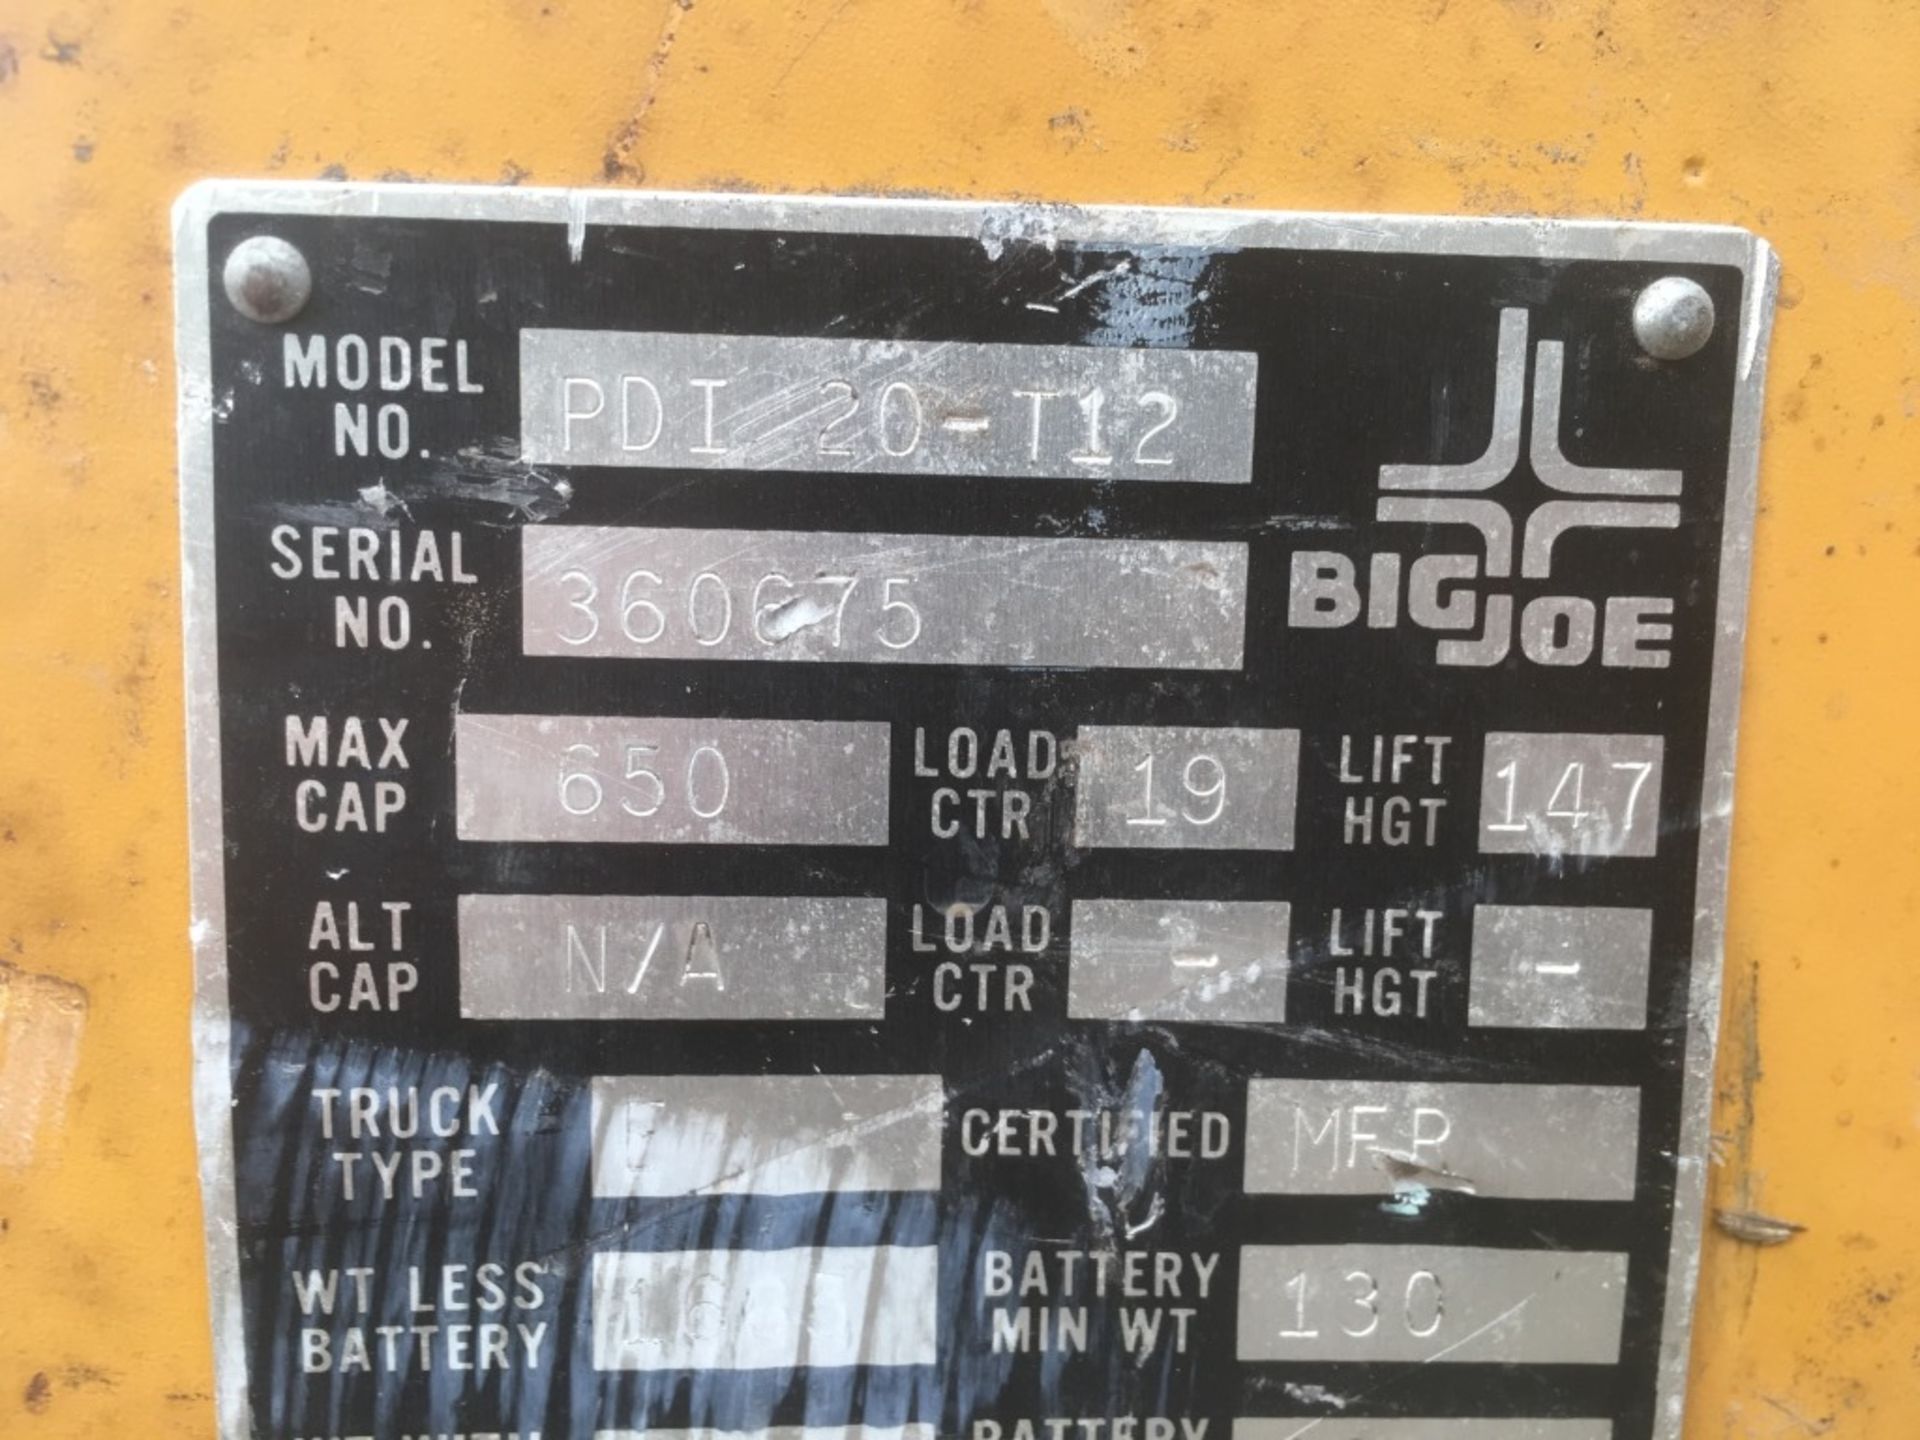 Big Joe PDI-20-T12 Electric Material Lift - Image 8 of 8